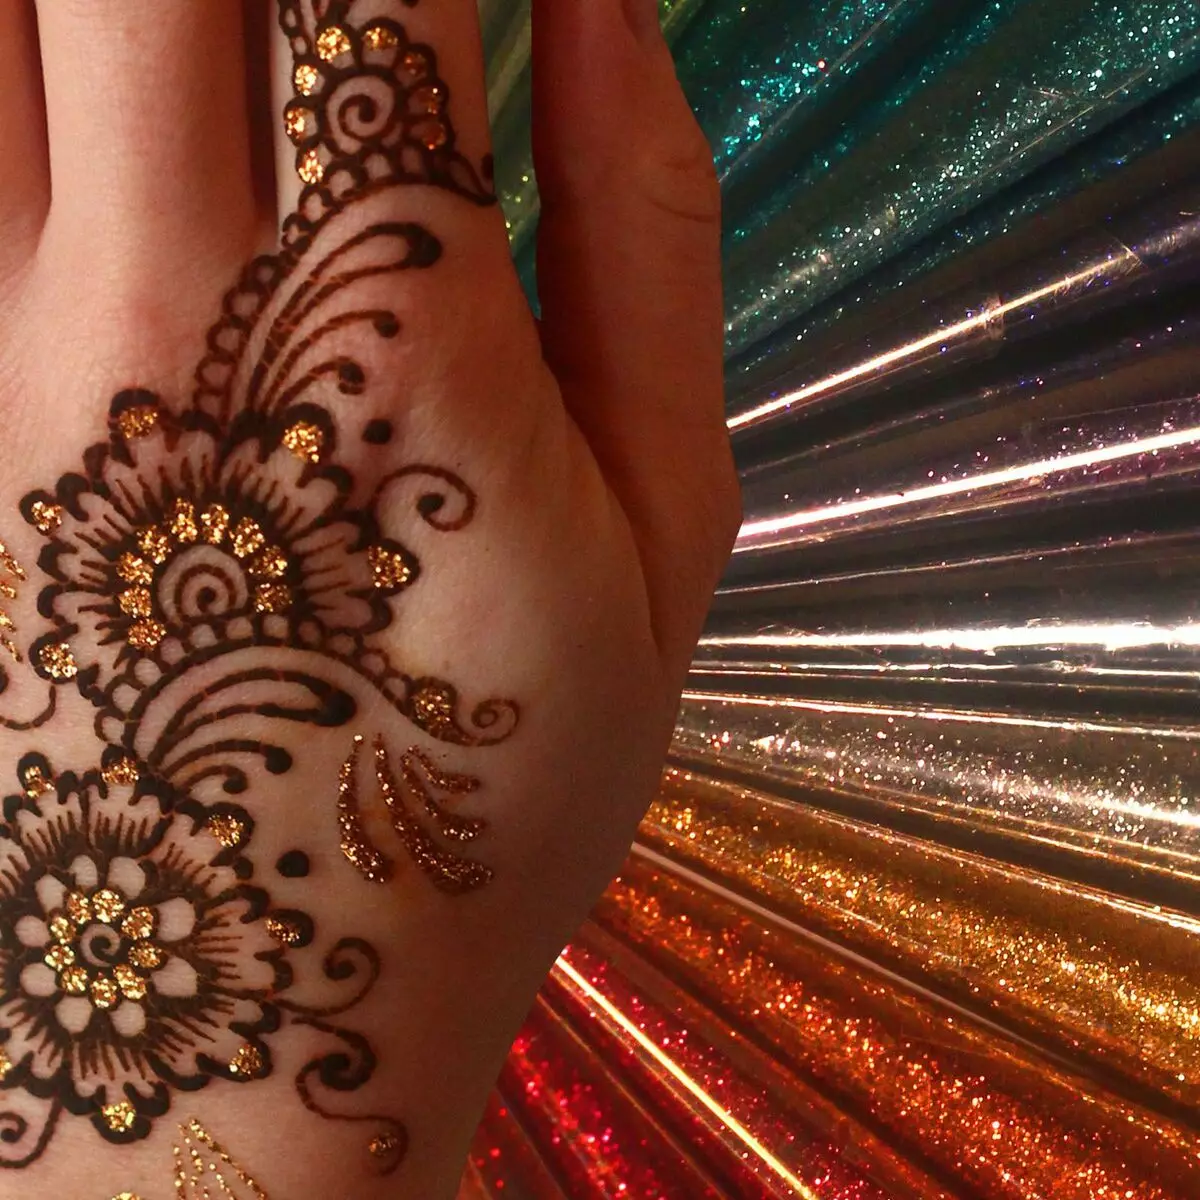 Biotate: Apa itu dan berapa banyak tatu henna dan berkilau? Bagaimana keadaan mereka? 291_18